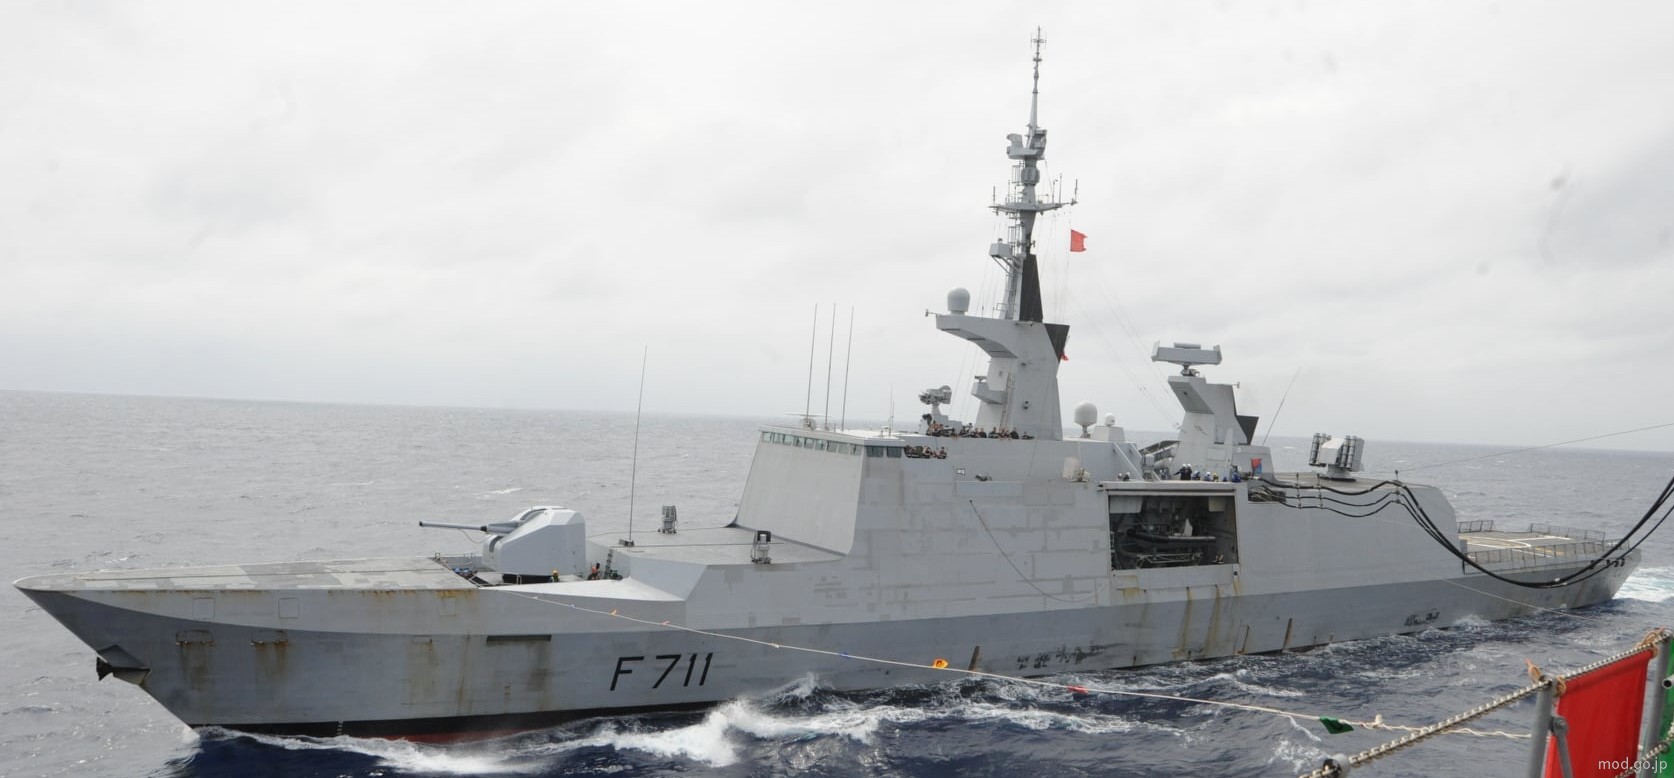 f-711 fs surcouf la fayette class frigate french navy marine nationale 20